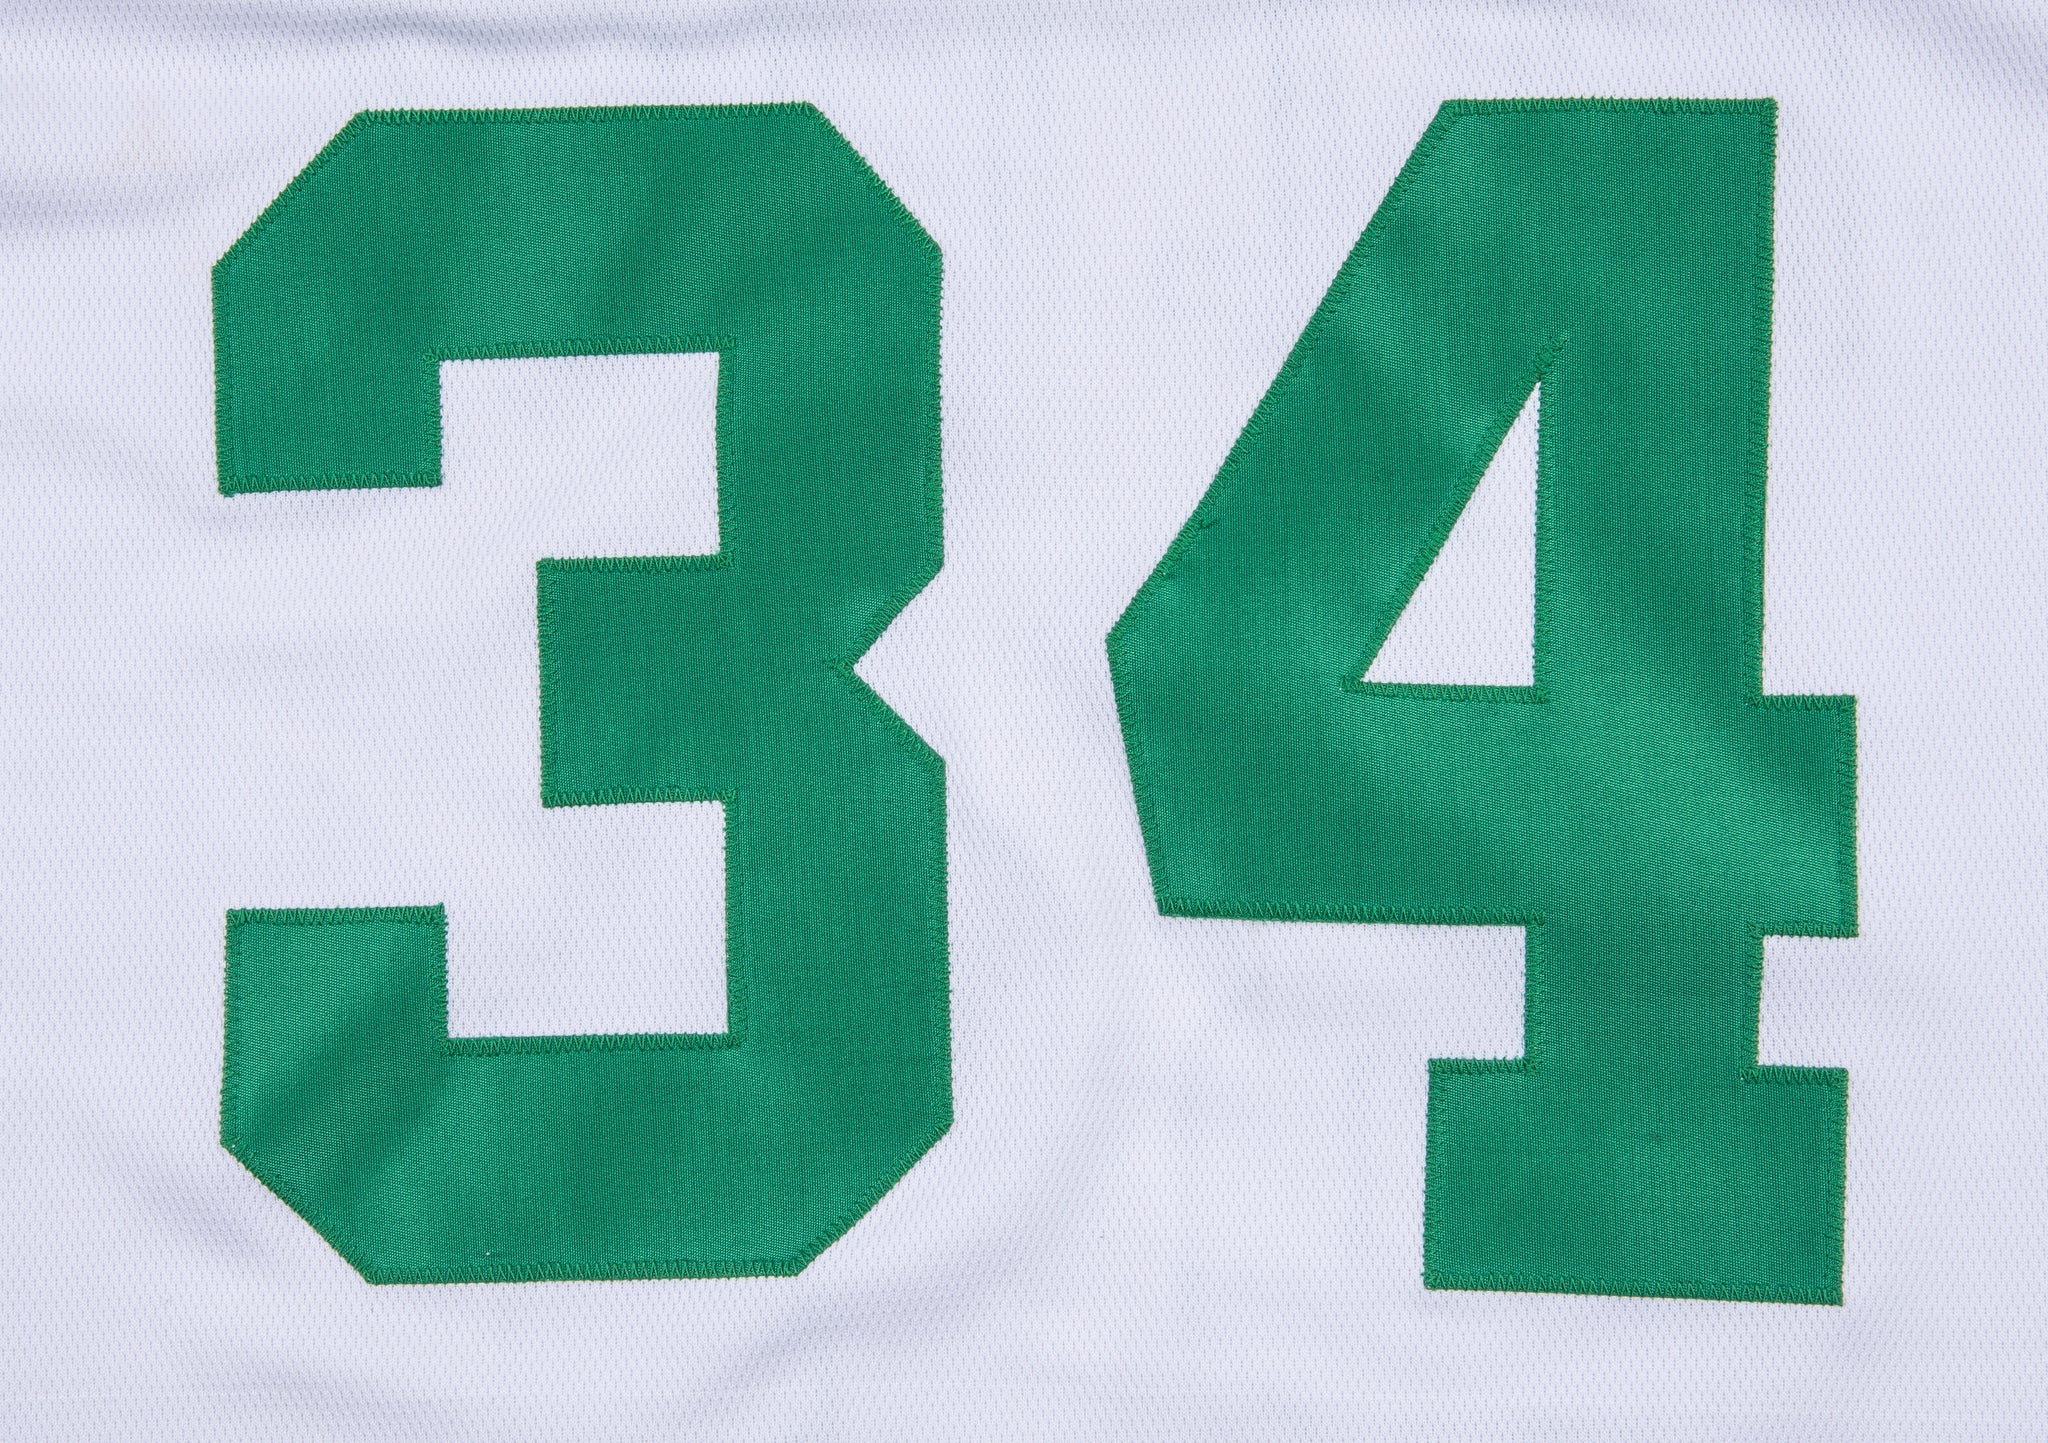  Paul Pierce Boston Celtics Green Youth 8-20 Hardwood Classic  Soul Swingman Player Jersey - Medium 10-12 : Sports & Outdoors